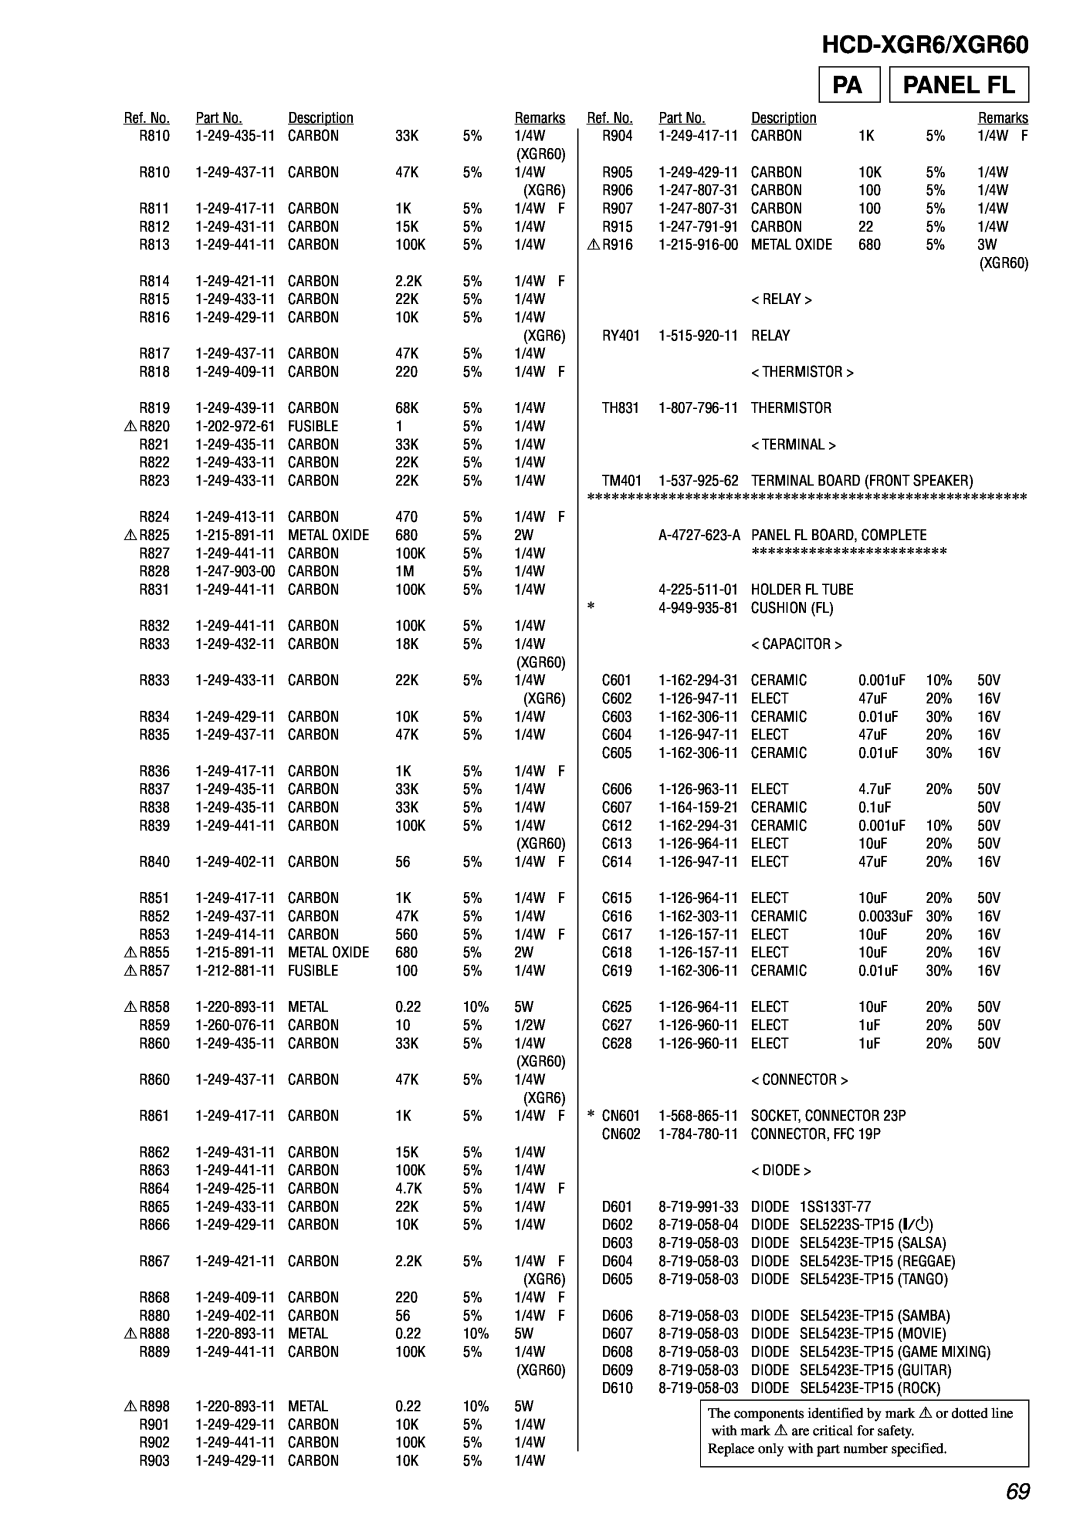 Sony HCD-XGR60 specifications Panel Fl, HCD-XGR6/XGR60 